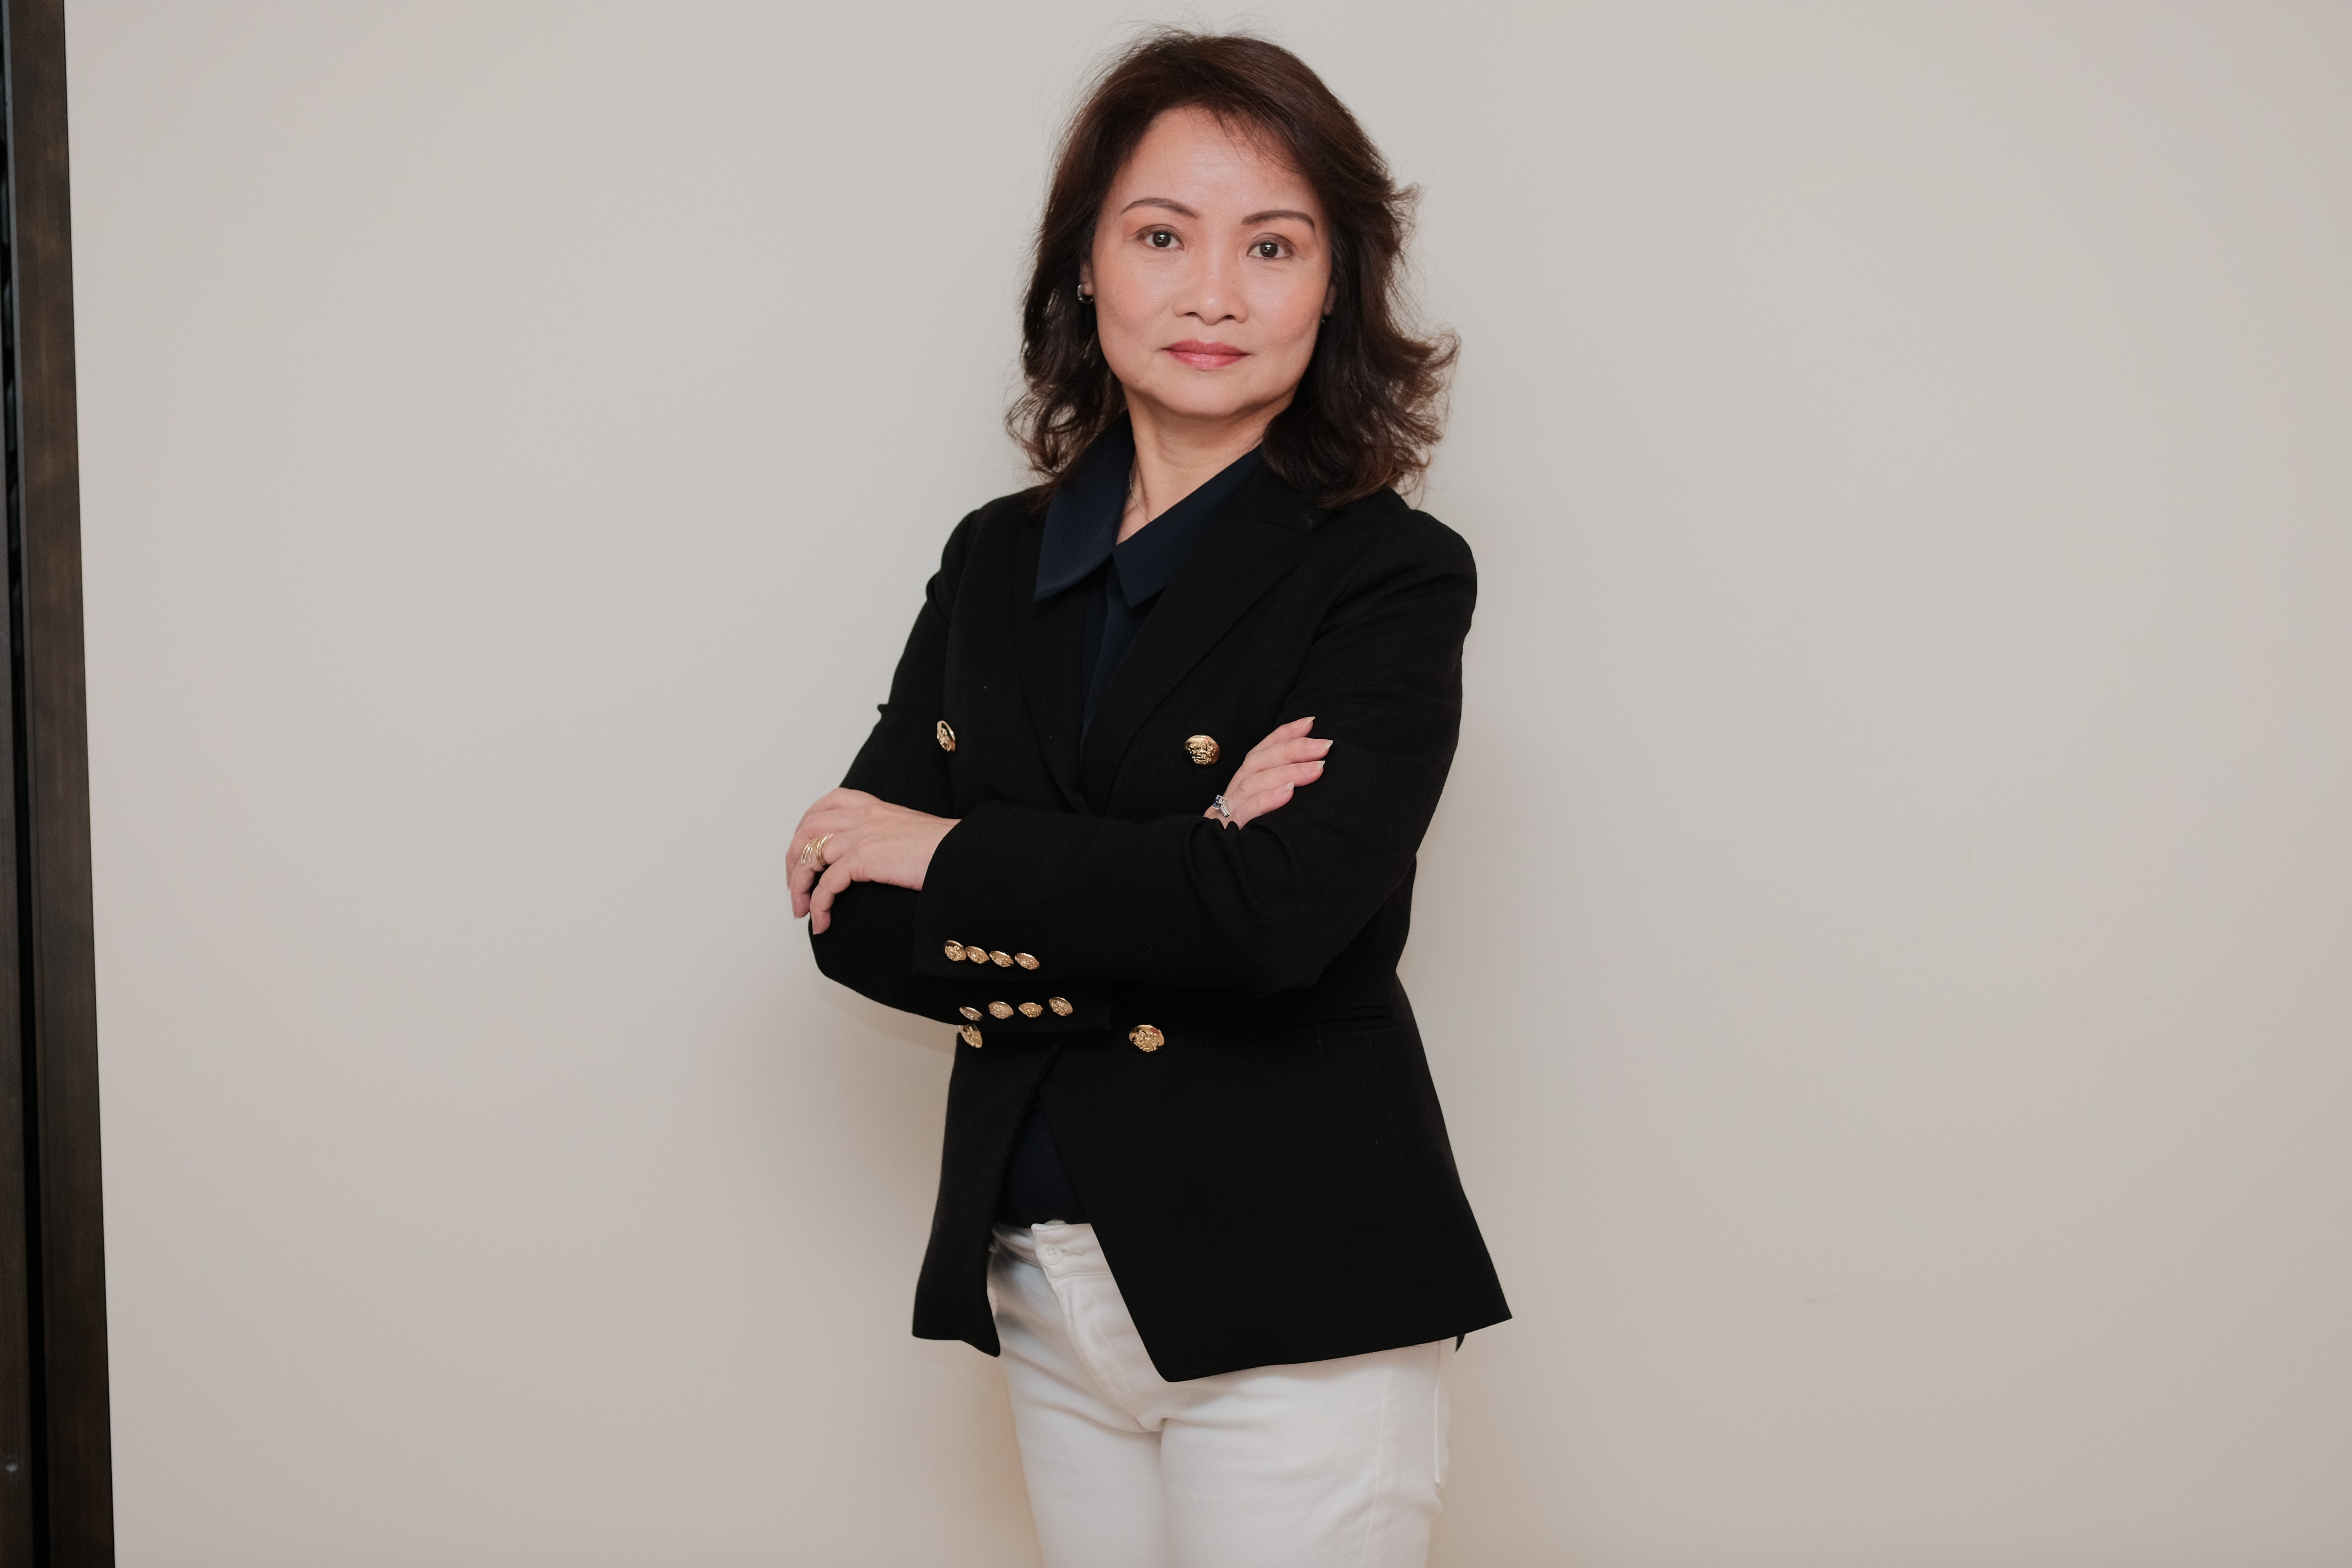 Audrey Bong, managing director